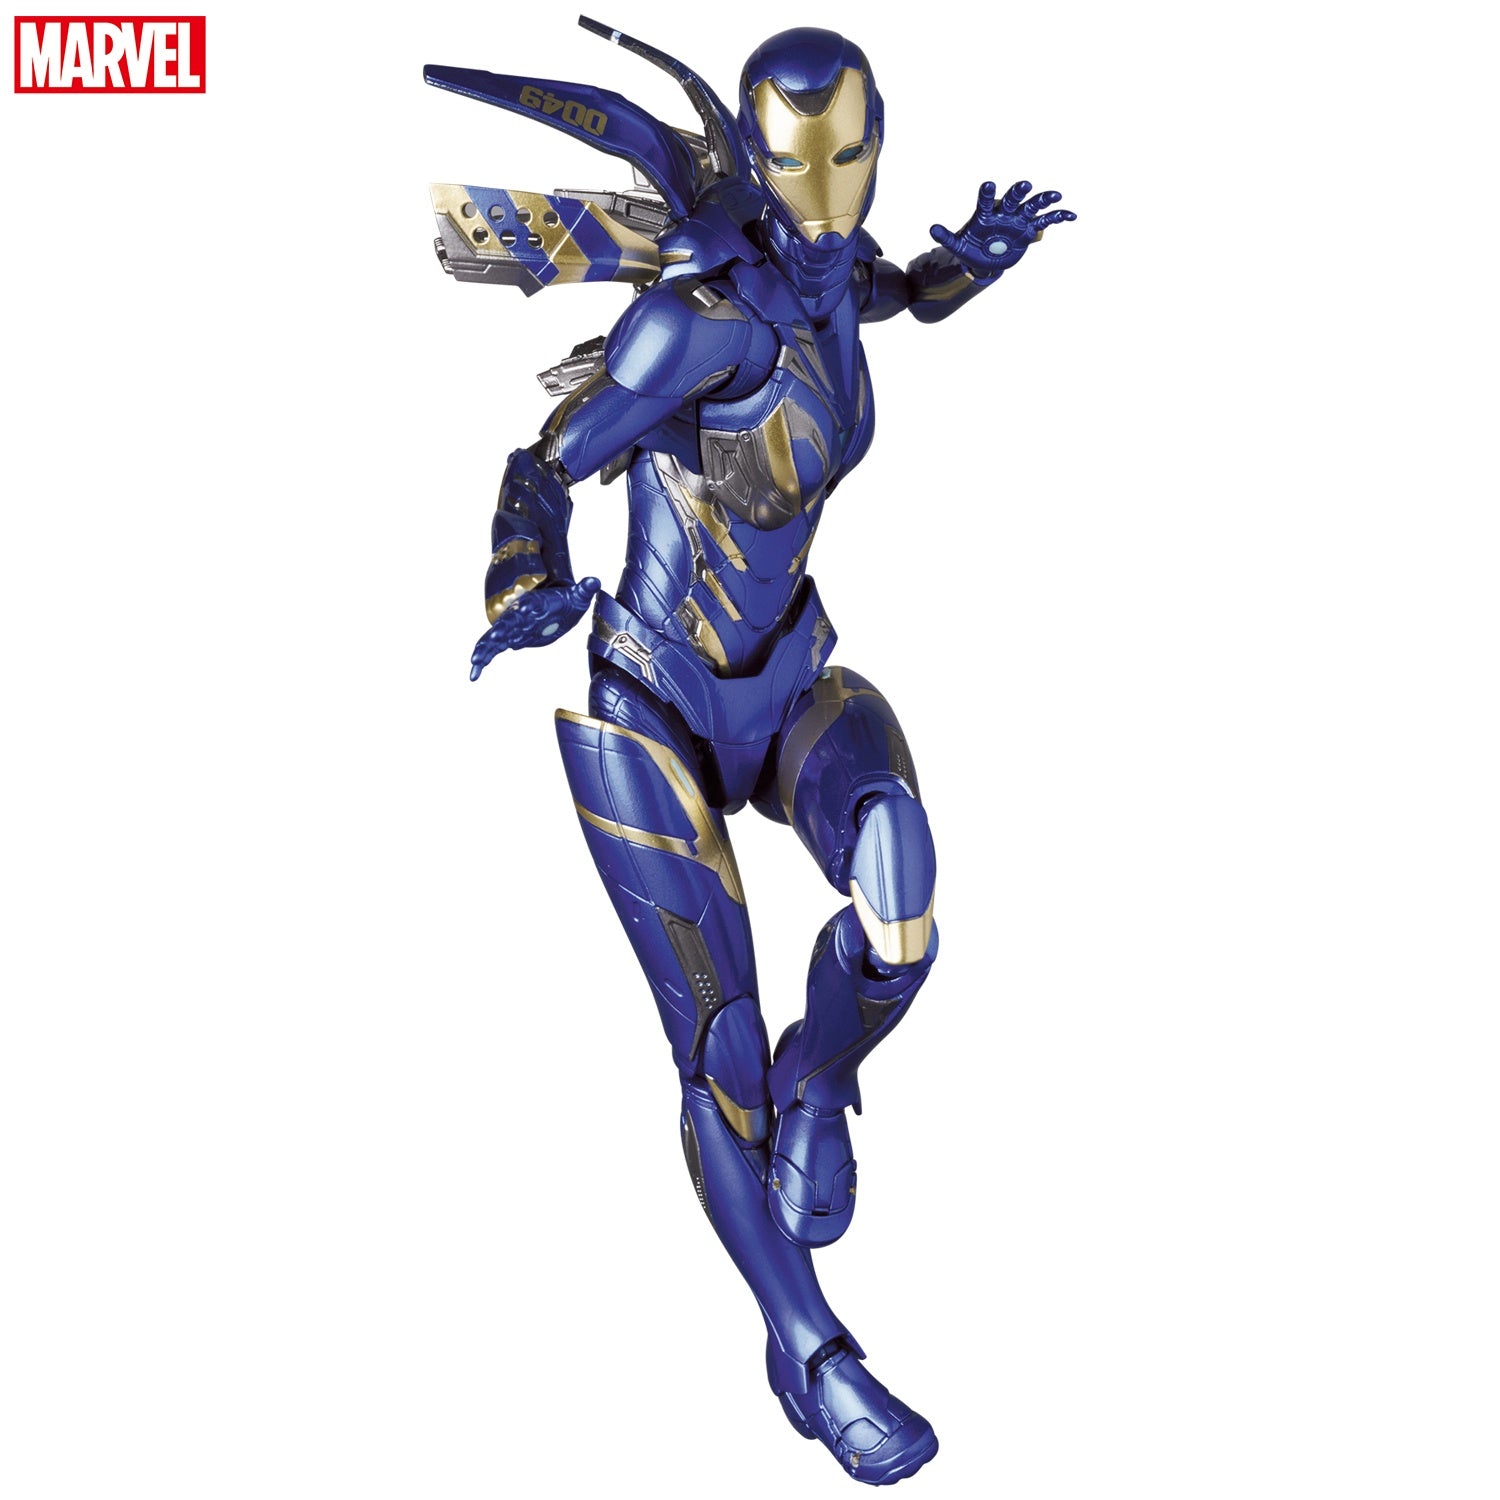 Medicom - MAFEX No. 184 - Avengers: Endgame - Rescue - Marvelous Toys